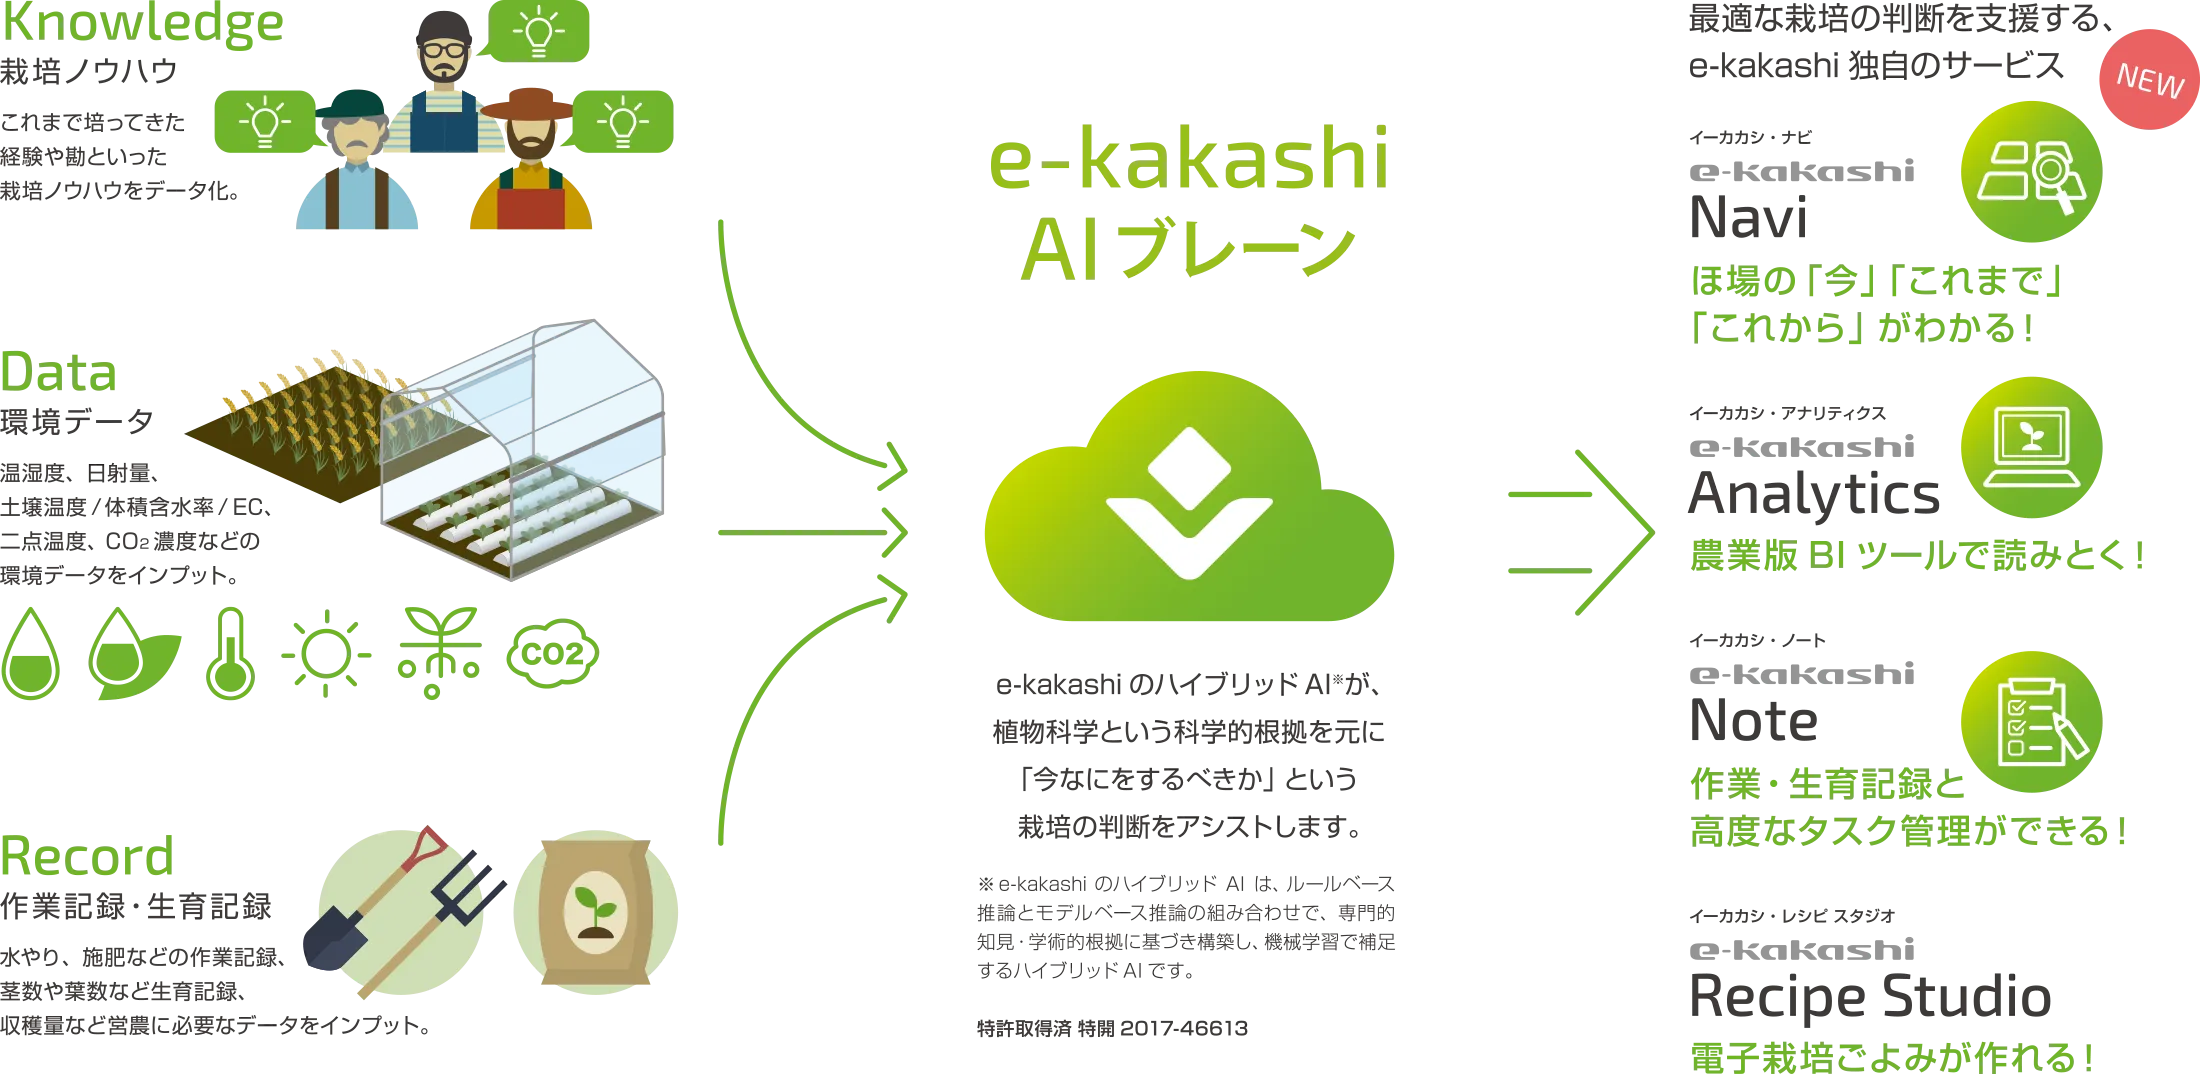 e-kakashi AI ブレーン　e-kakashiのハイブリッドAIが、植物科学という科学的根拠を元に「今なにをするべきか」という栽培の判断をアシストします。